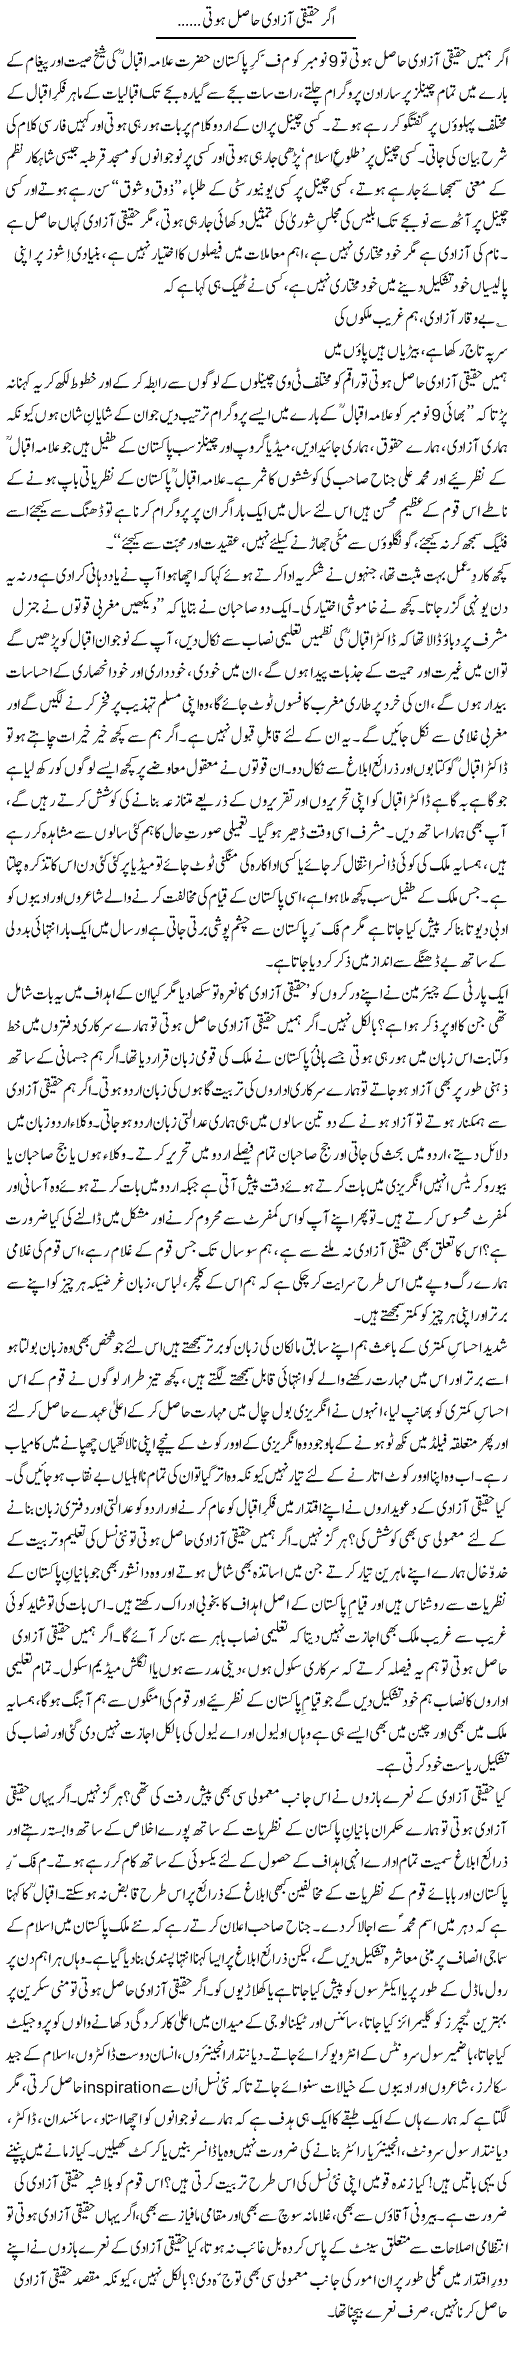 Zulfiqar Ahmad Cheema Column About 9th November Allama Muhammad Iqbal